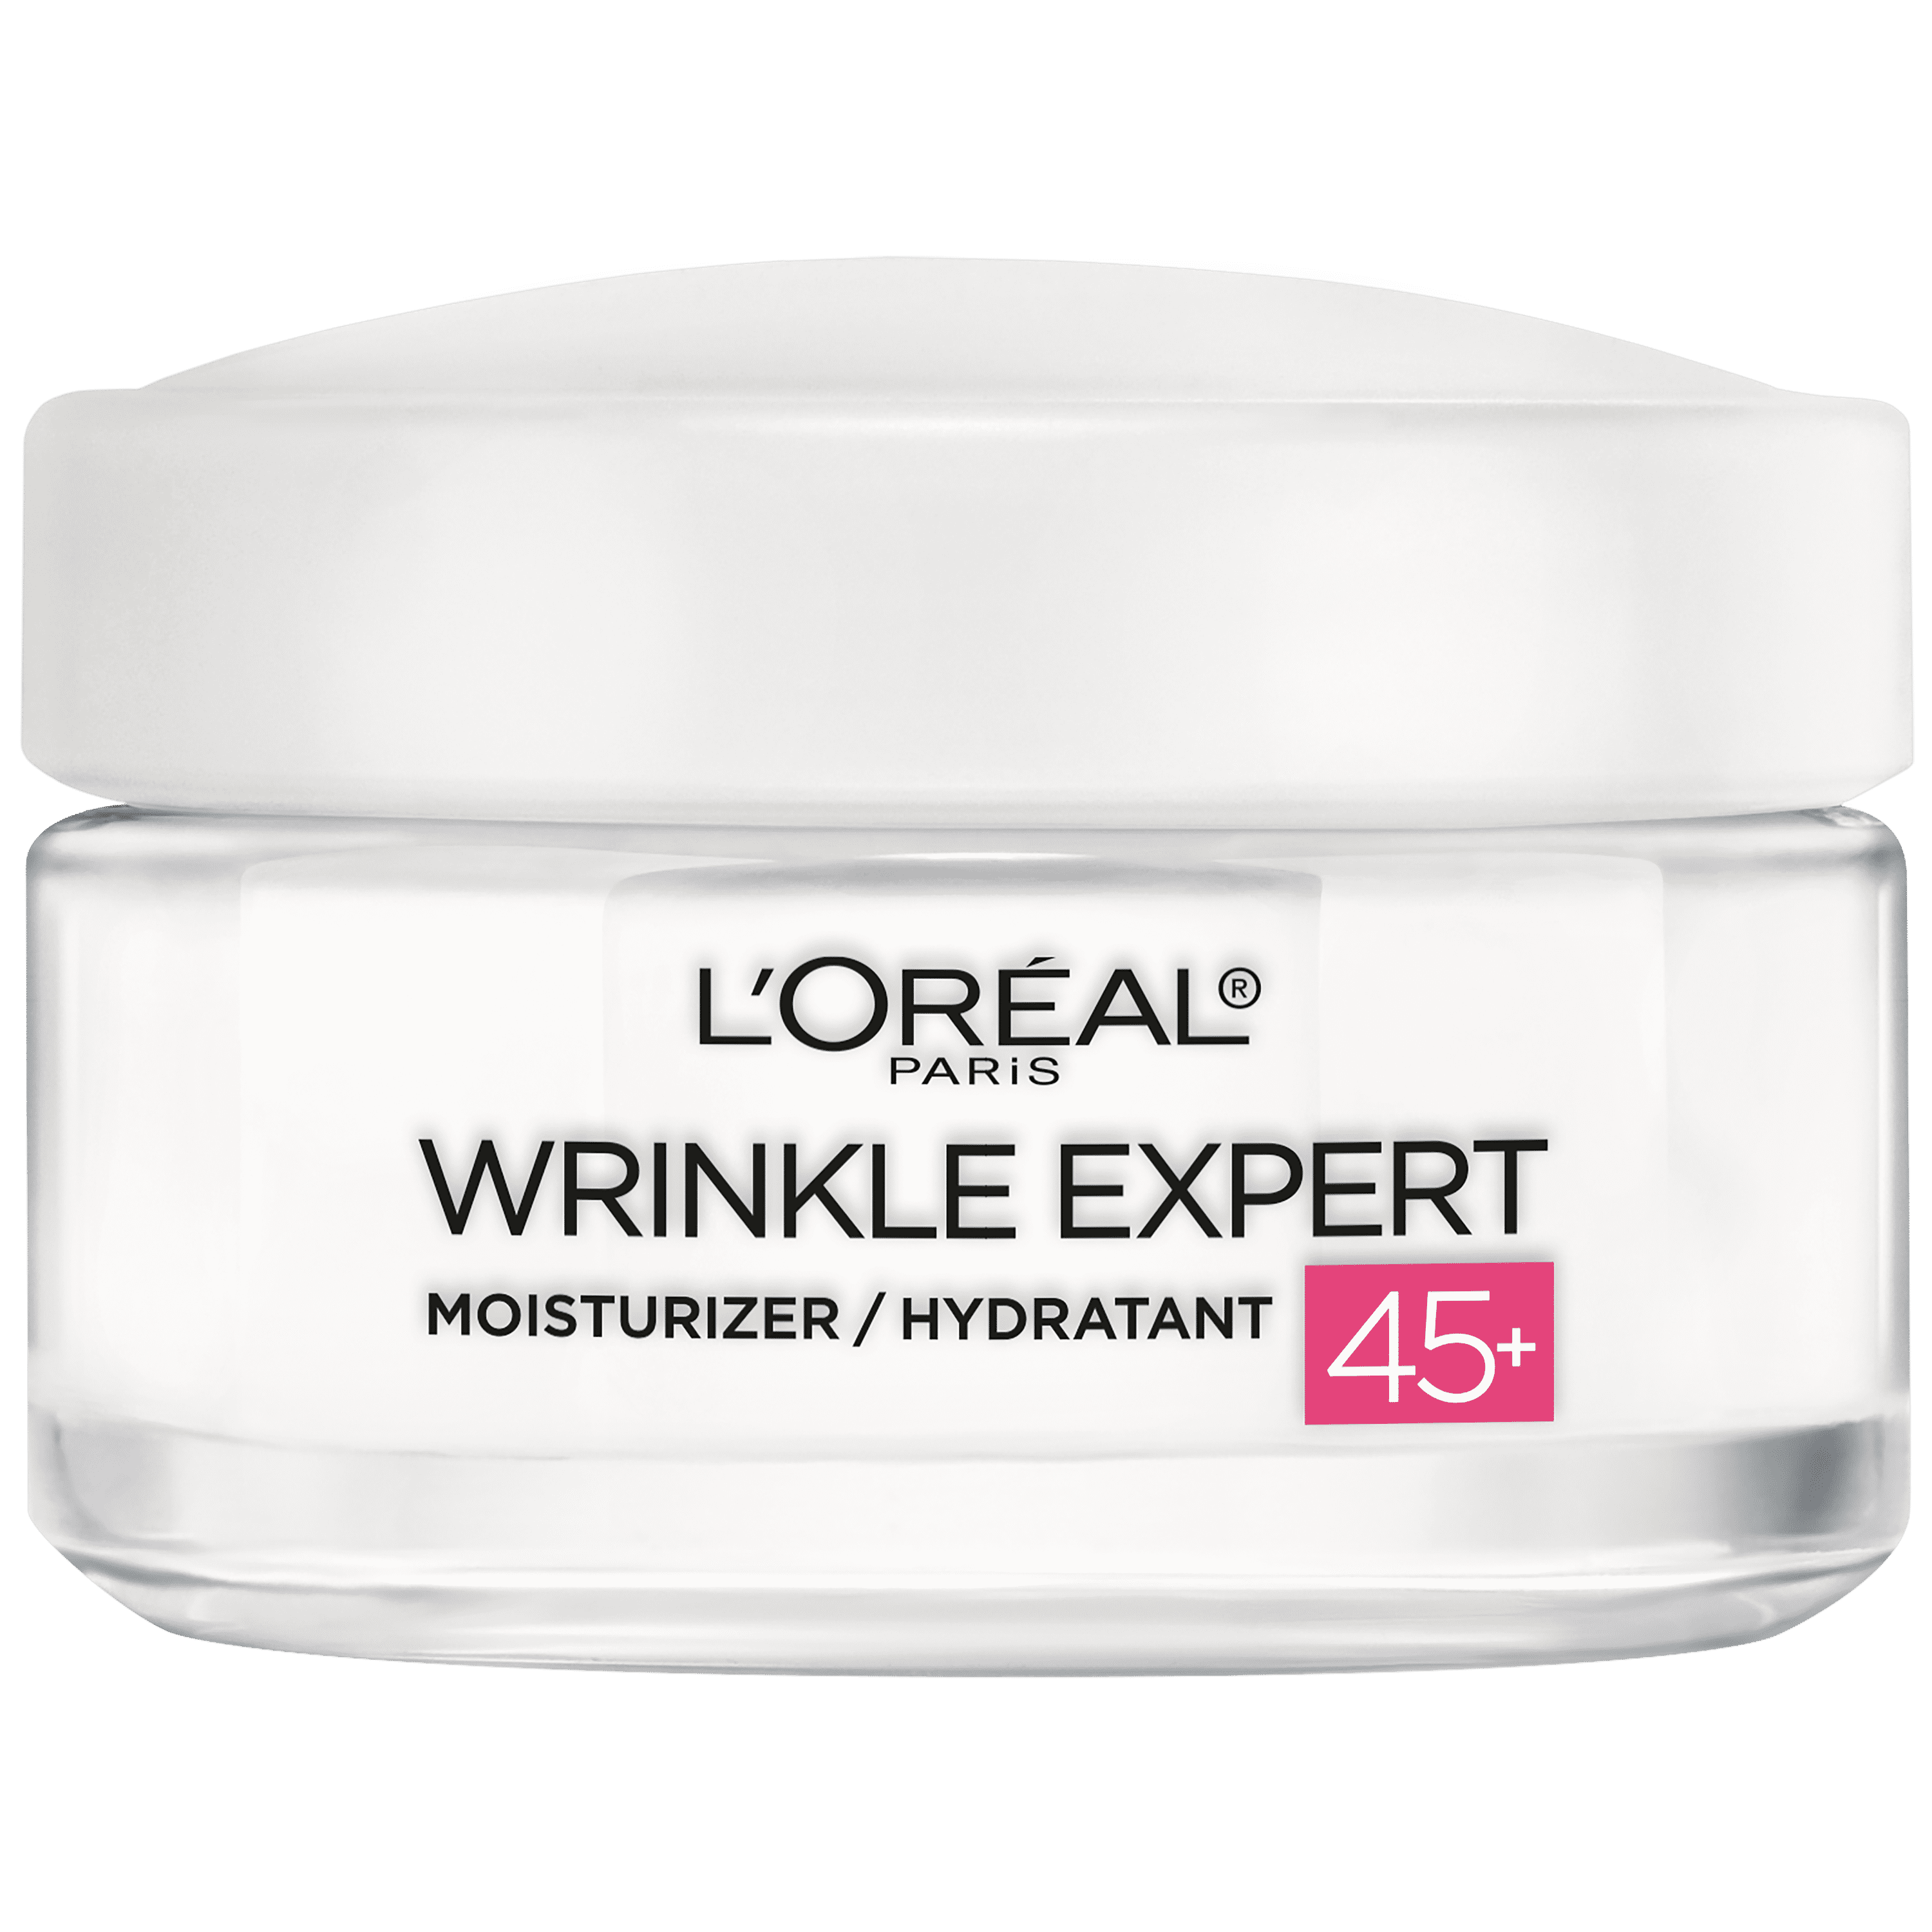 L'Oreal Paris Wrinkle Expert 45+ Moisturizer, 1.7 oz